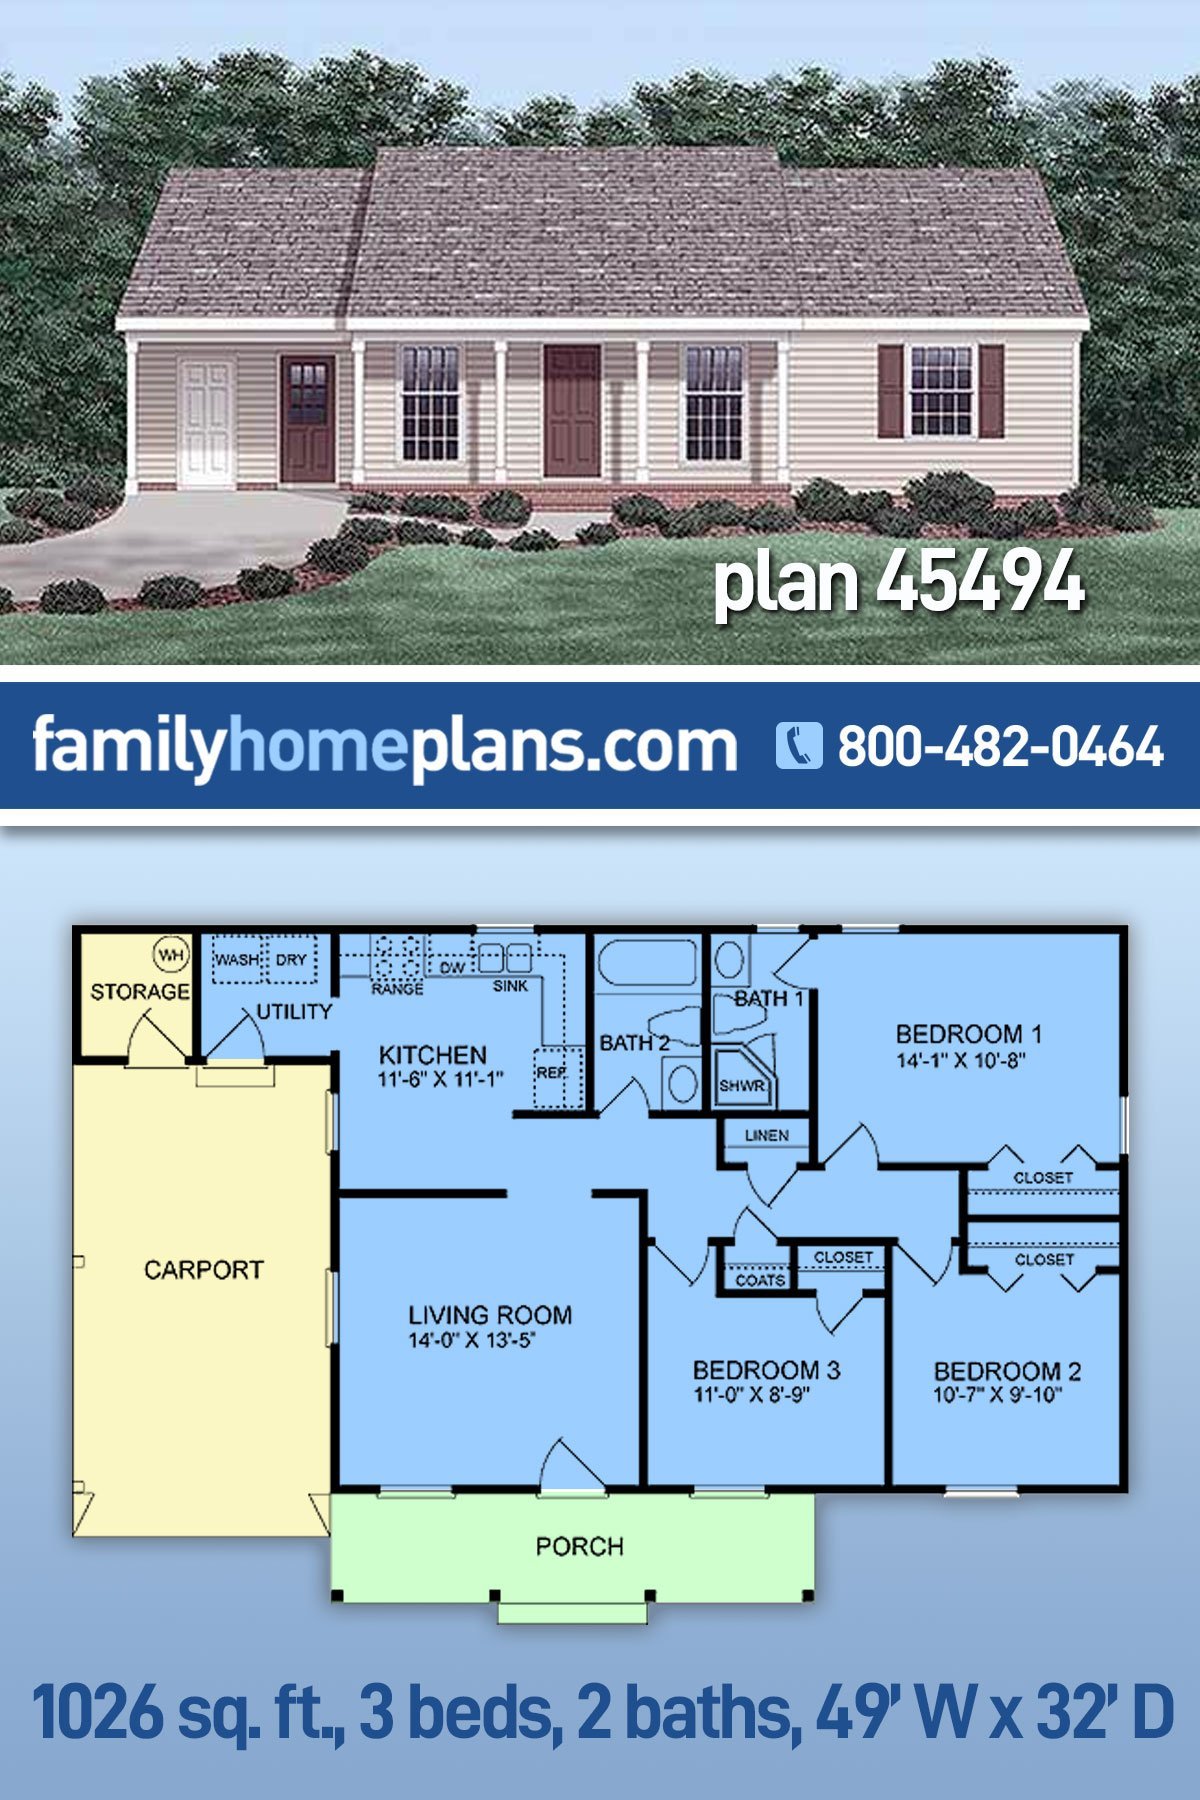 House Plan 45494